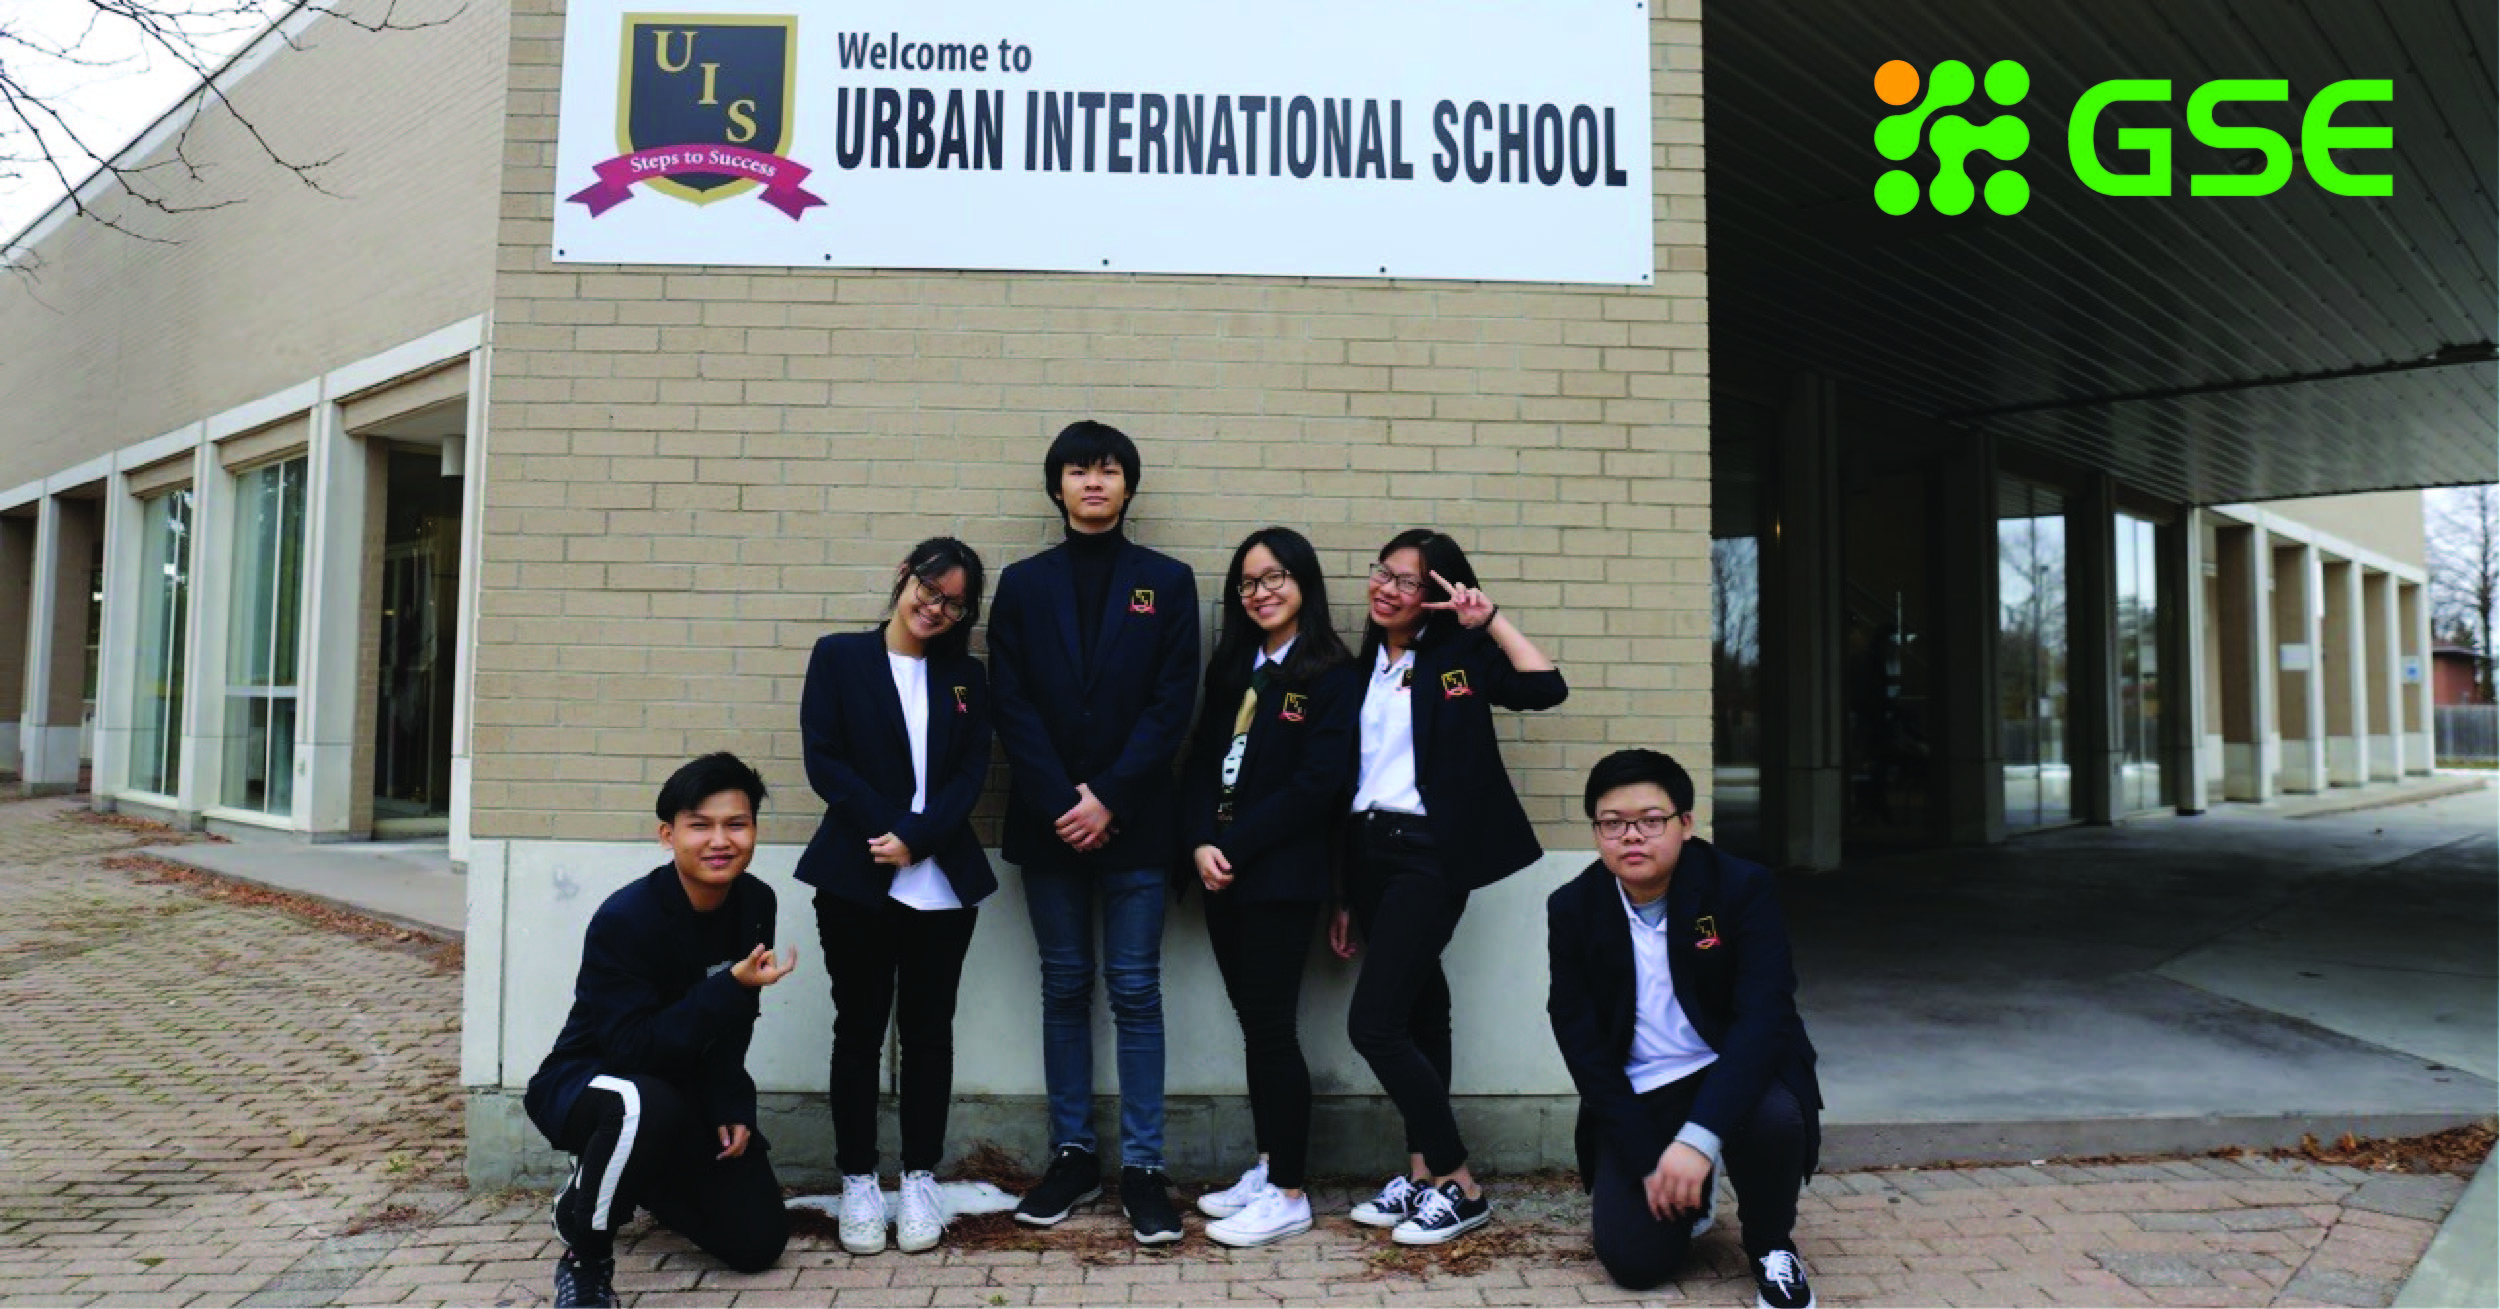 Urban International School mở cửa lớp học trực tiếp từ tháng 8/2021